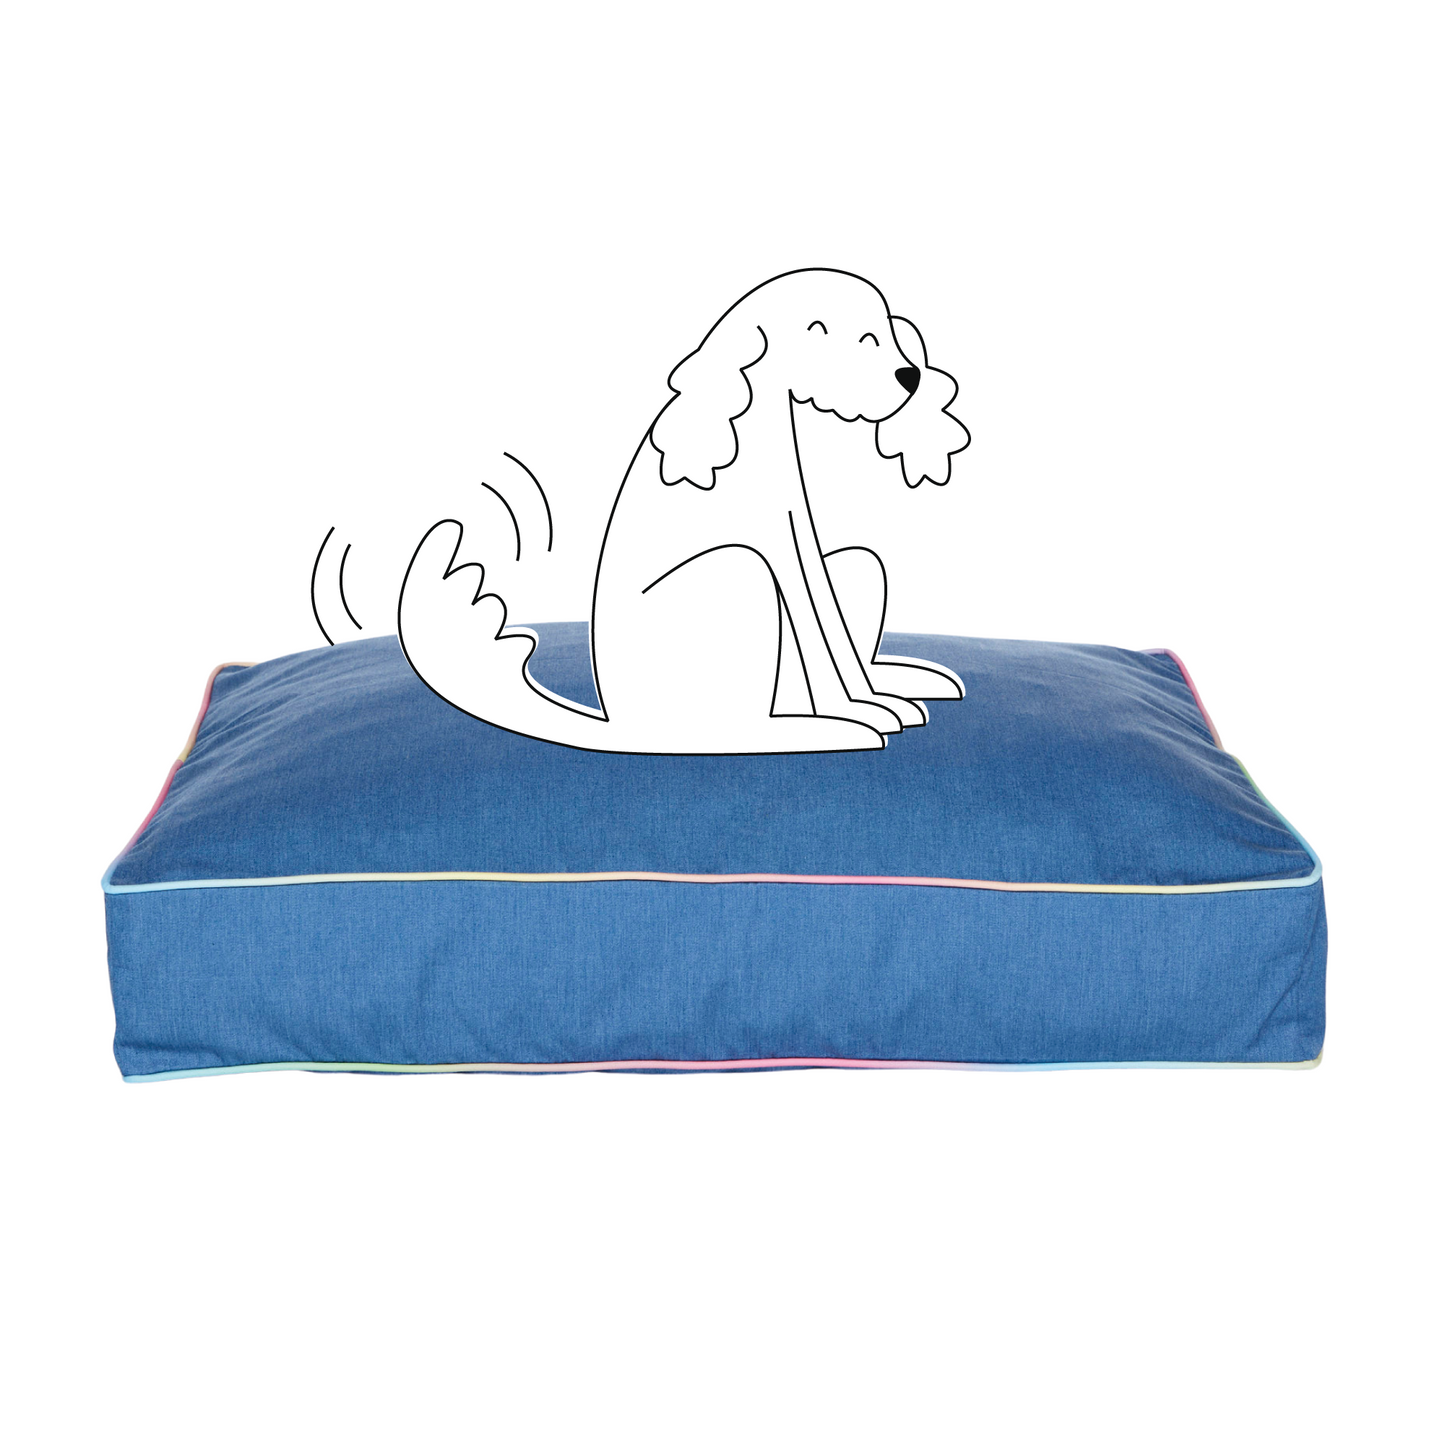 denim dog bed chic stylish dog bed